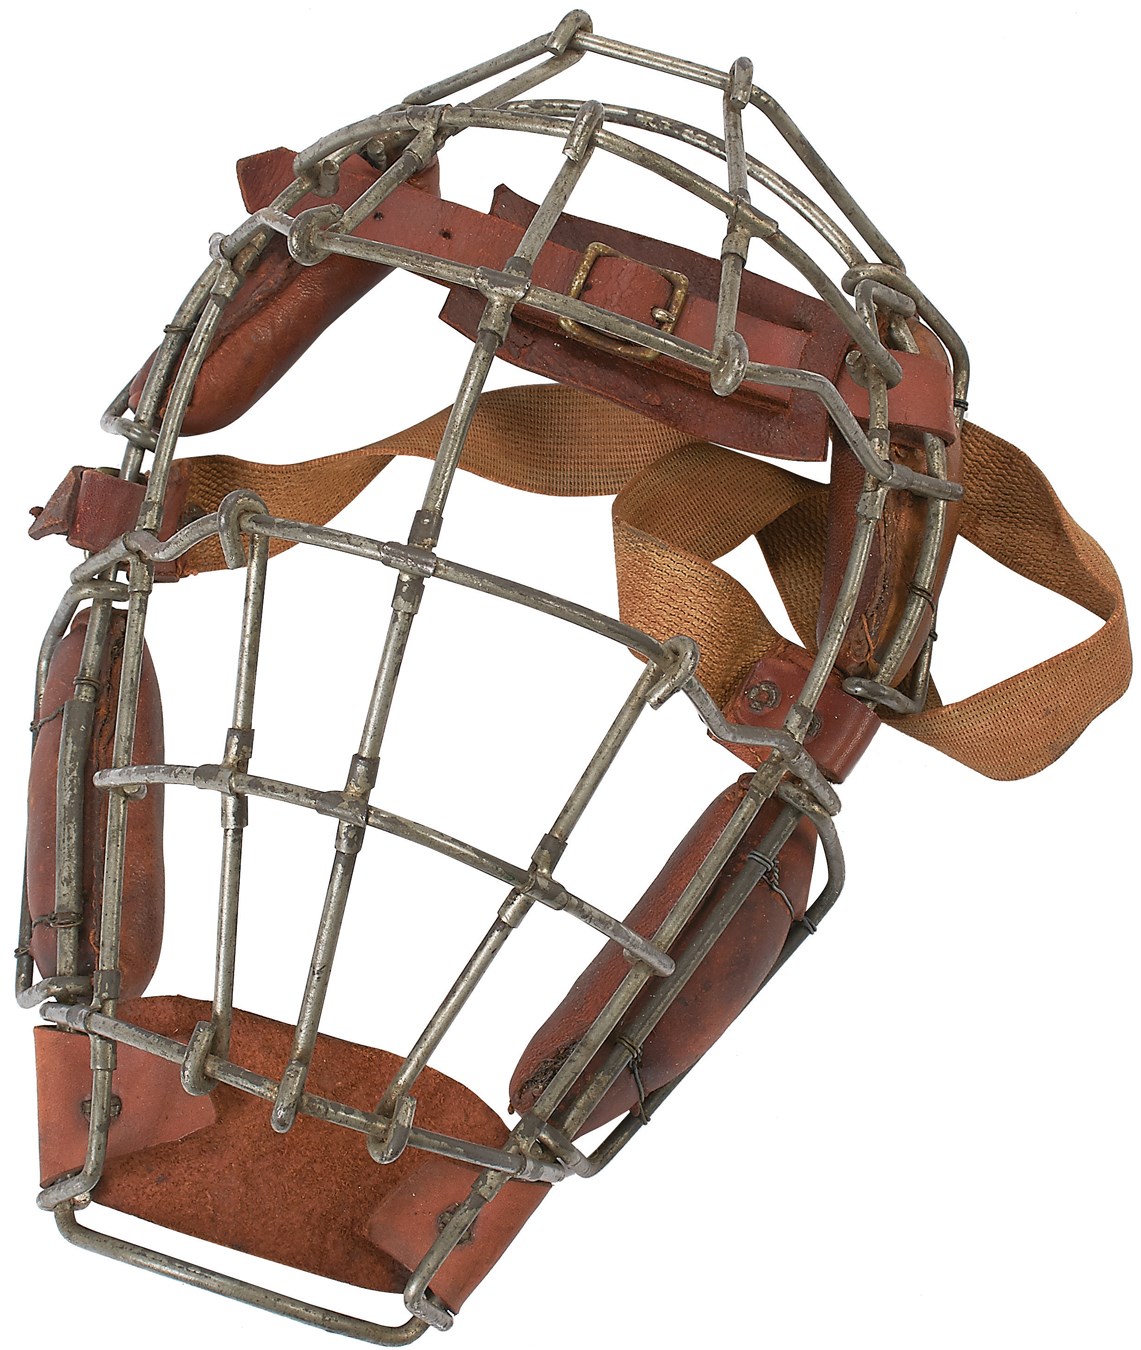 Antique Sporting Goods - High Grade 1890s Catcher's Mask